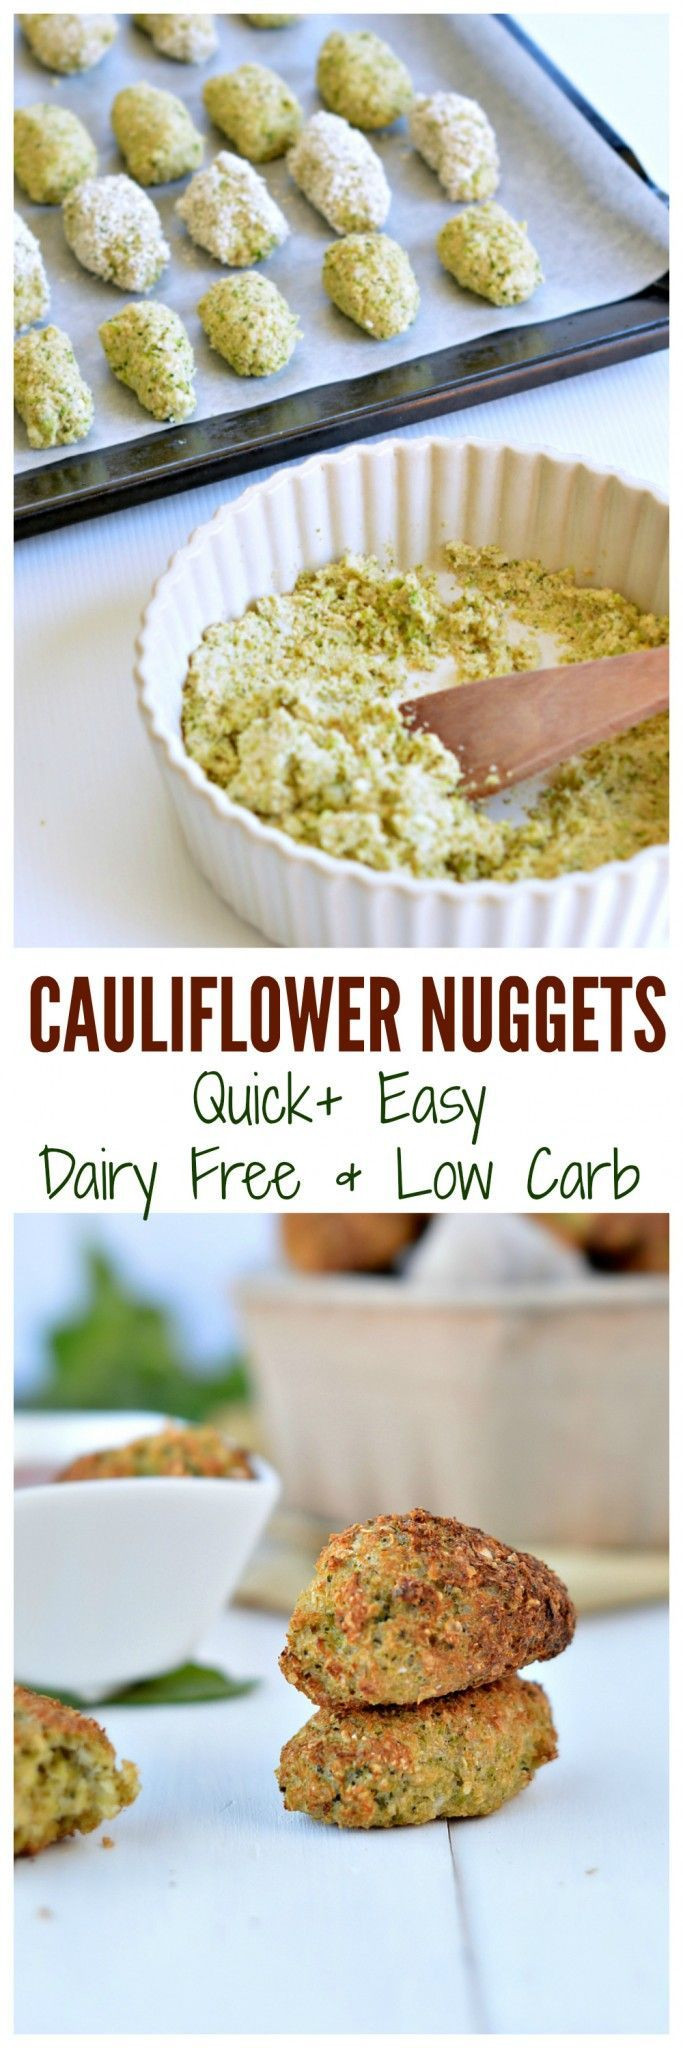 Low Carb Dairy Free Recipes
 Baked cauliflower nug s take 10 minutes to prepare 20